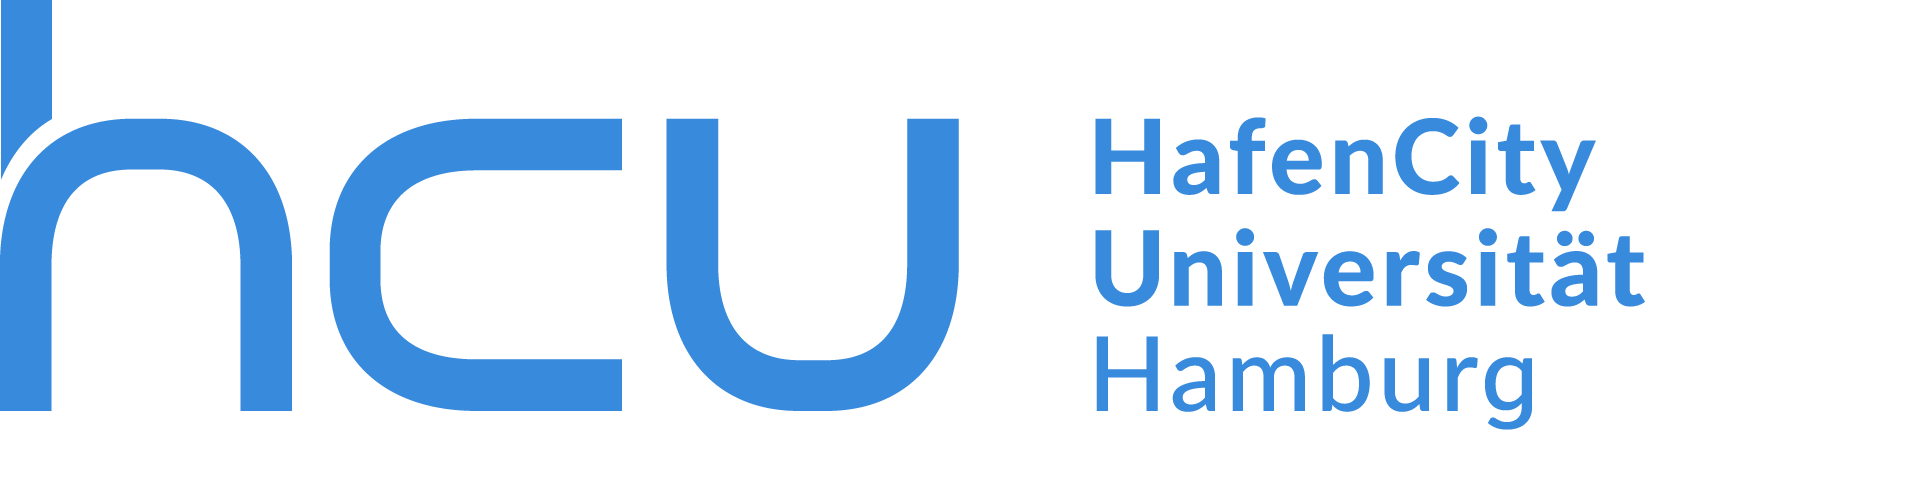 Hafencity Universität Hamburg